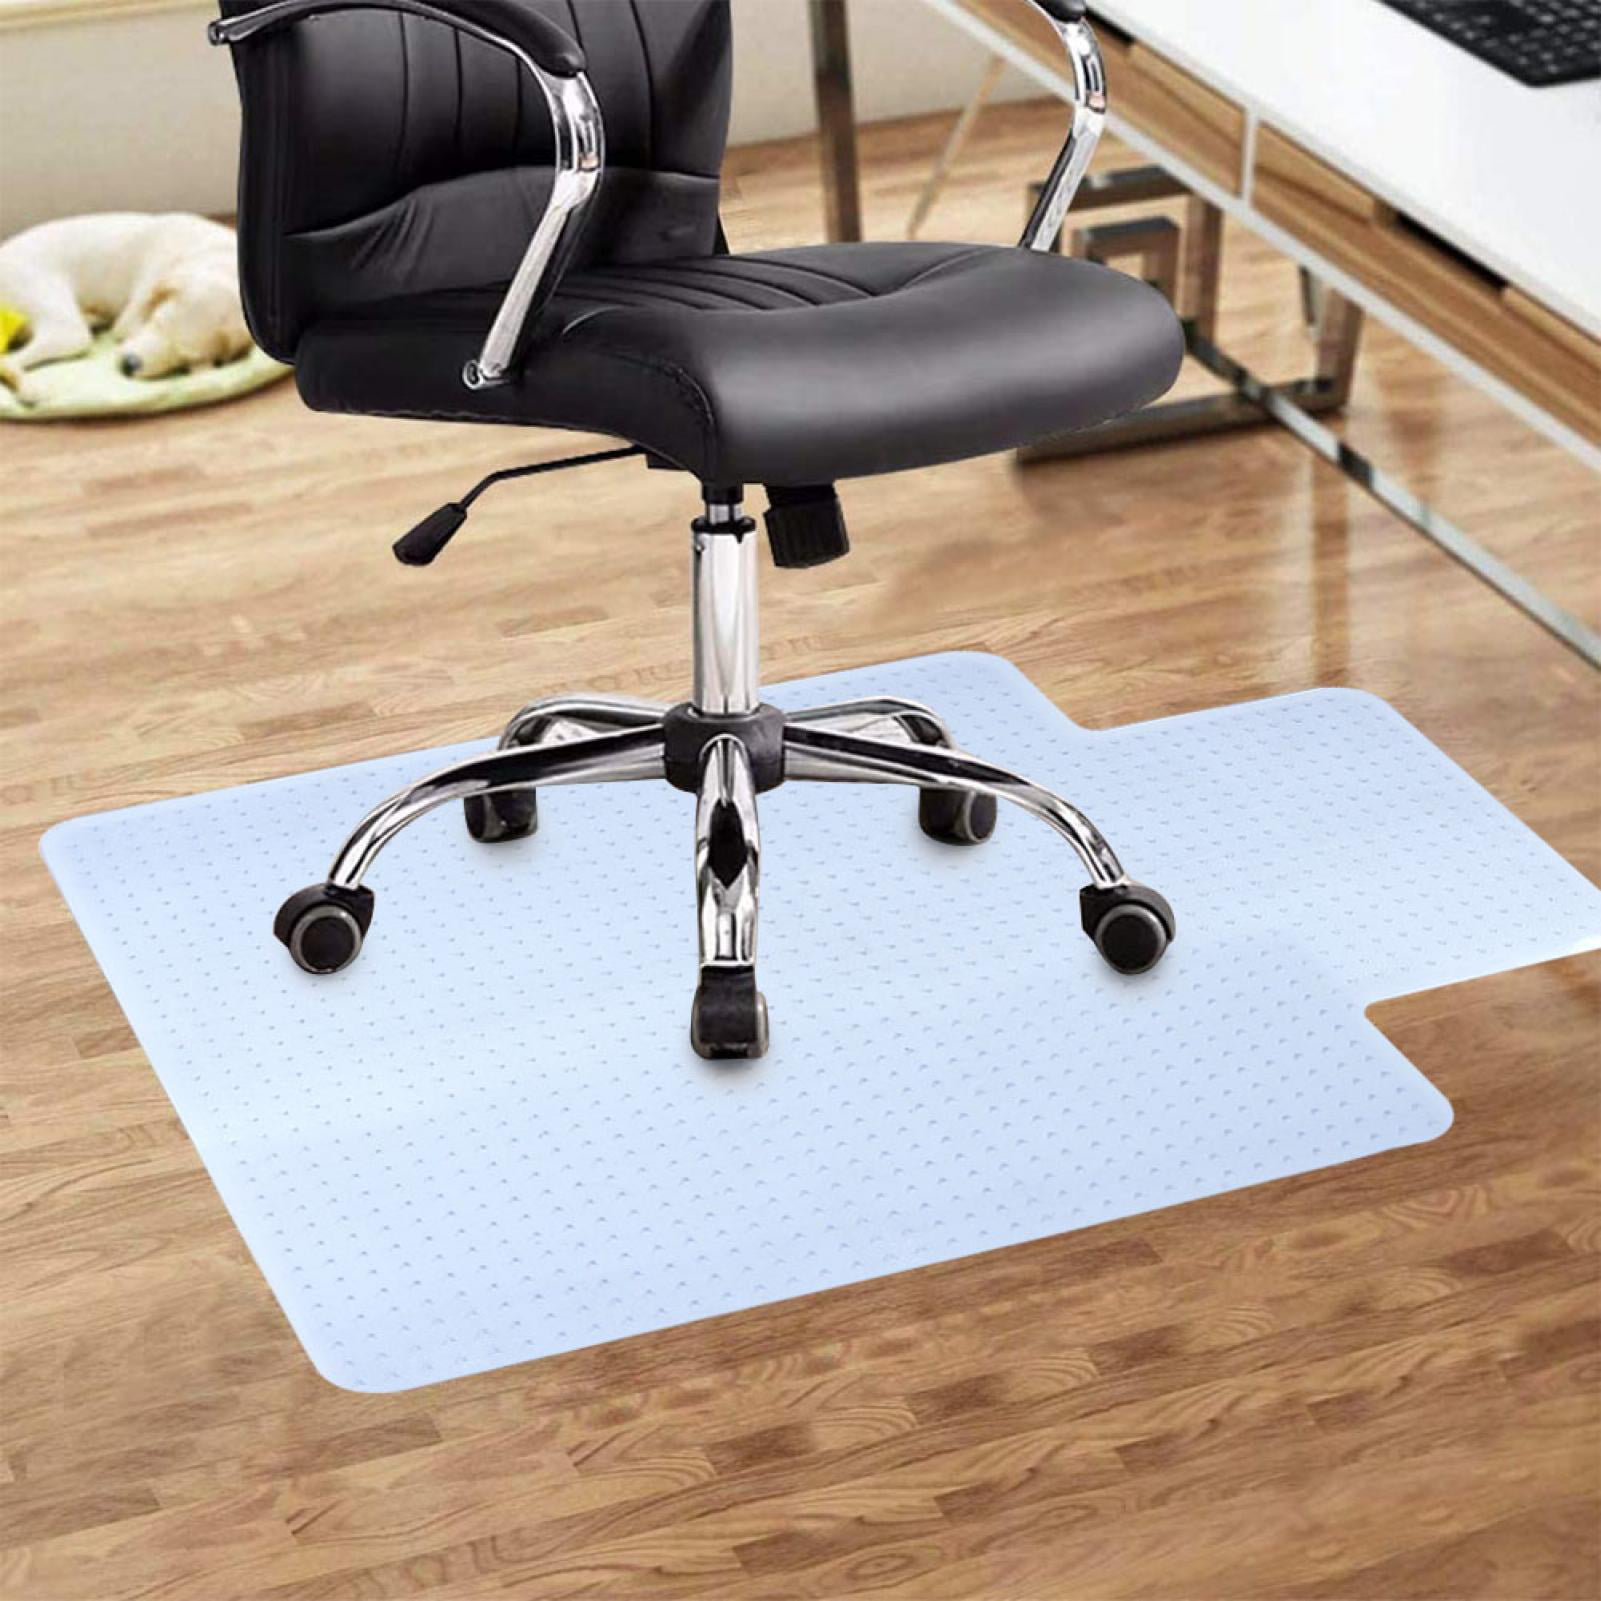 Transparent Clear Chair Mat Home Office Computer Desk Floor Carpet PVC Protector 